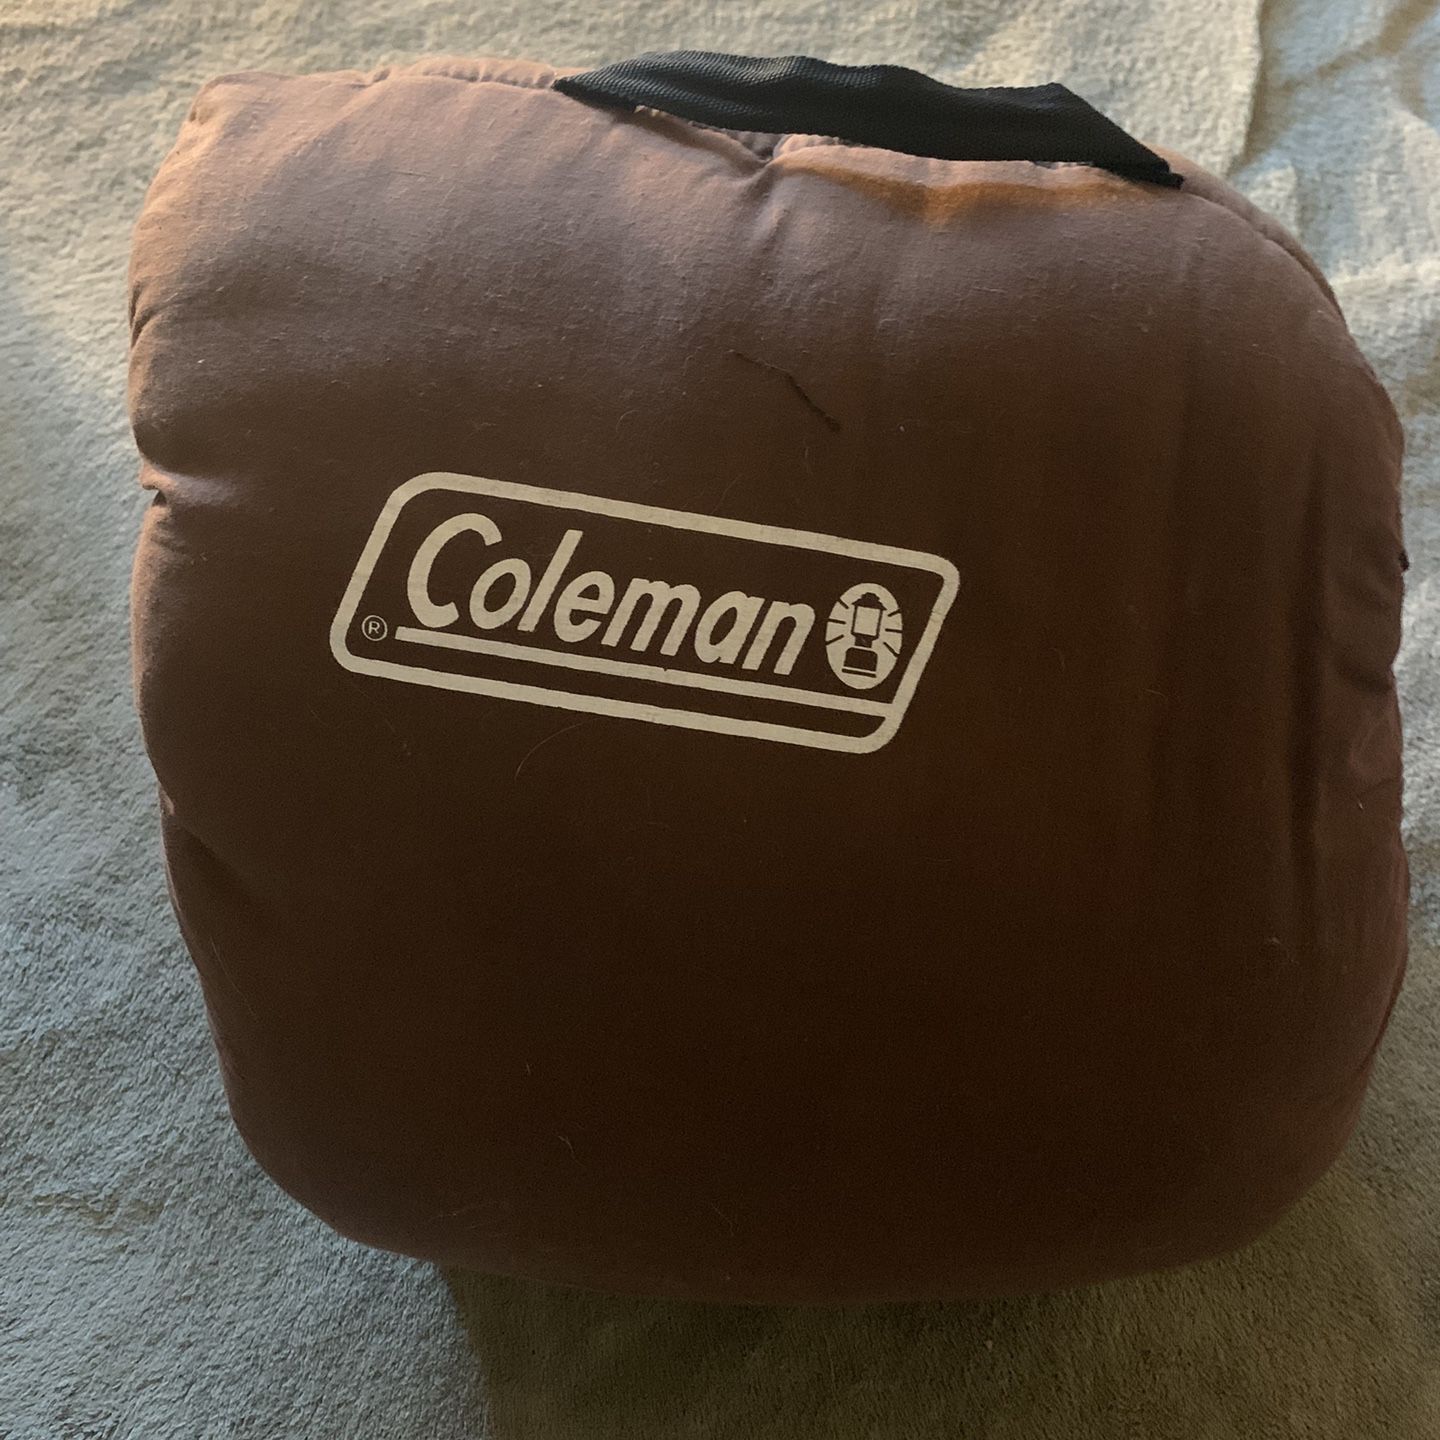 Coleman sleeping bag